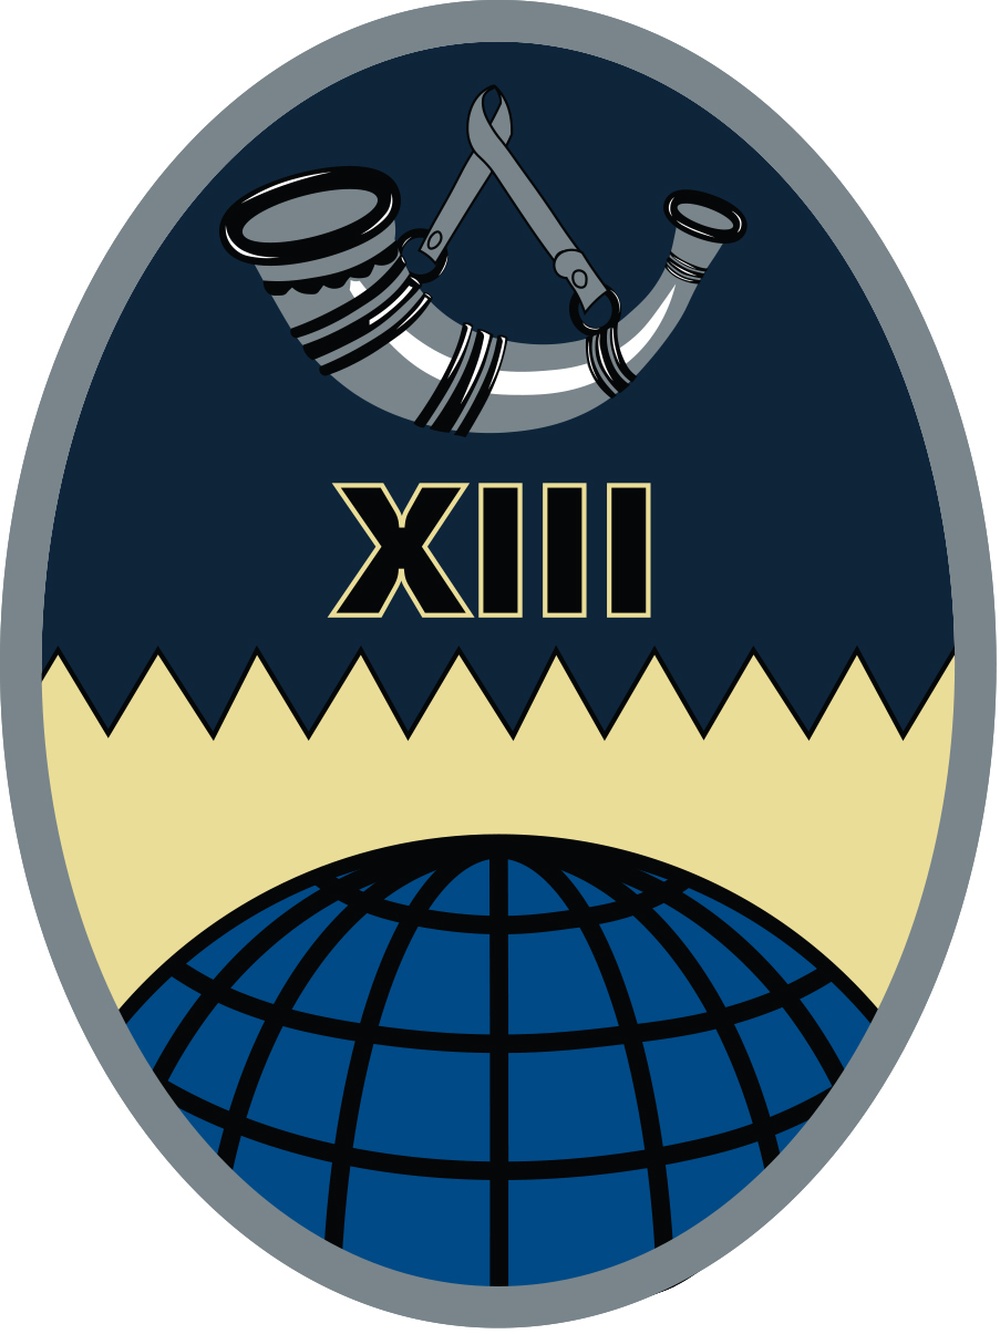 13 SWS - Official Emblem